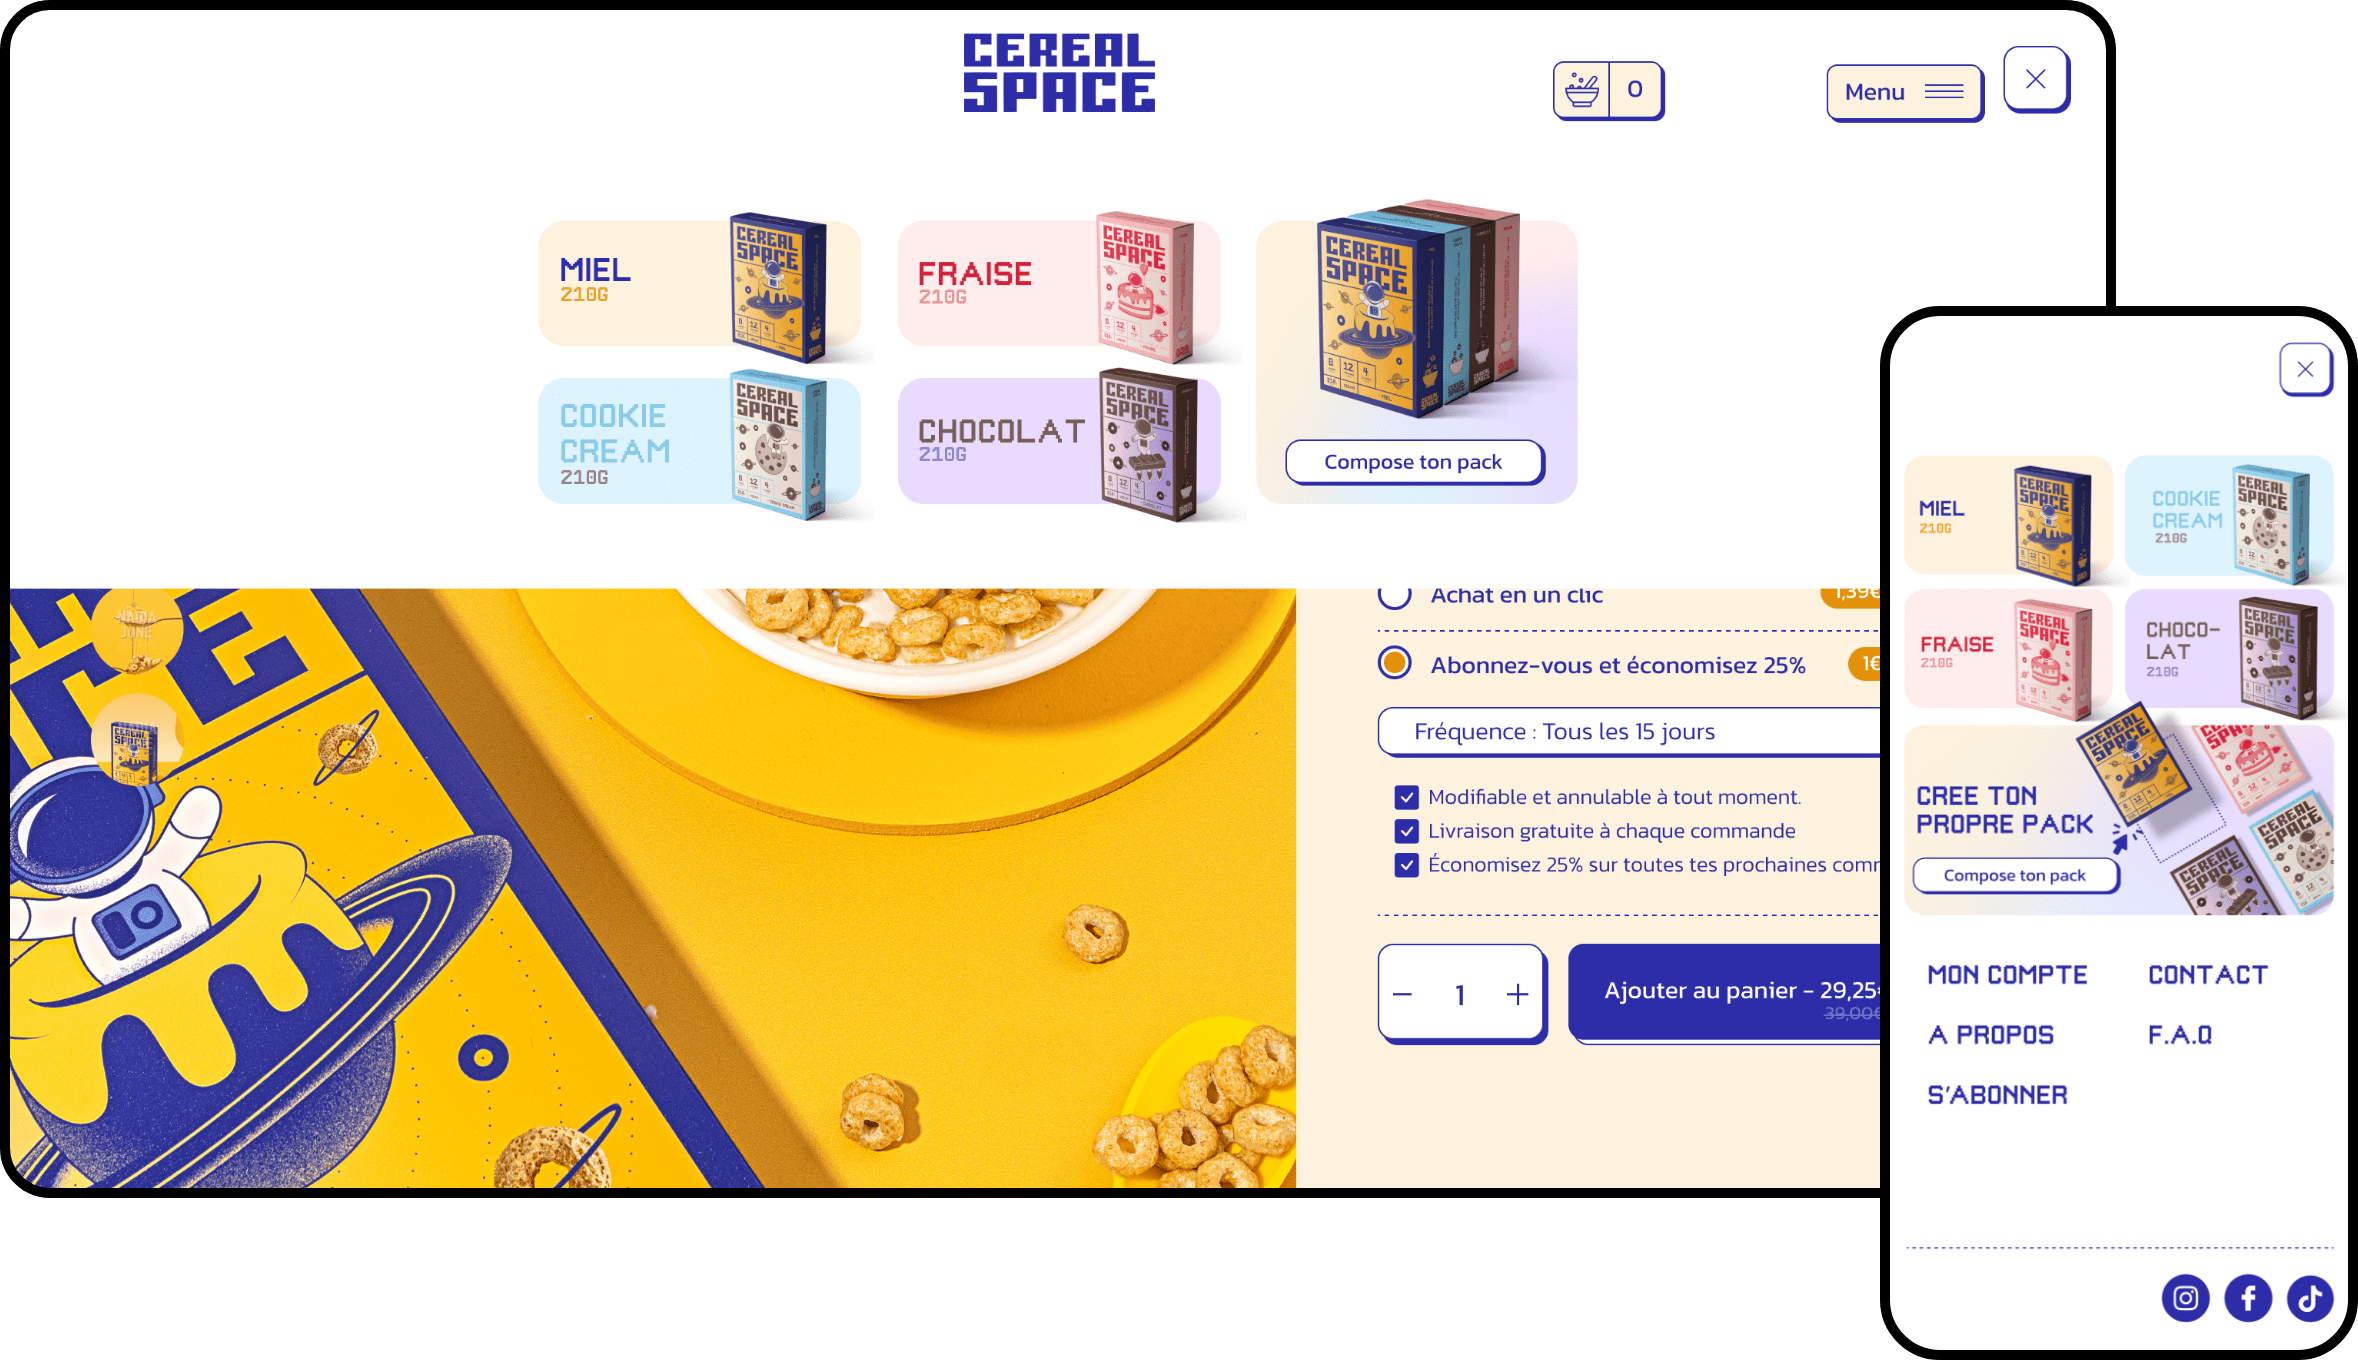 patrick-morvan-design-Cereal-space-desktop-3-min